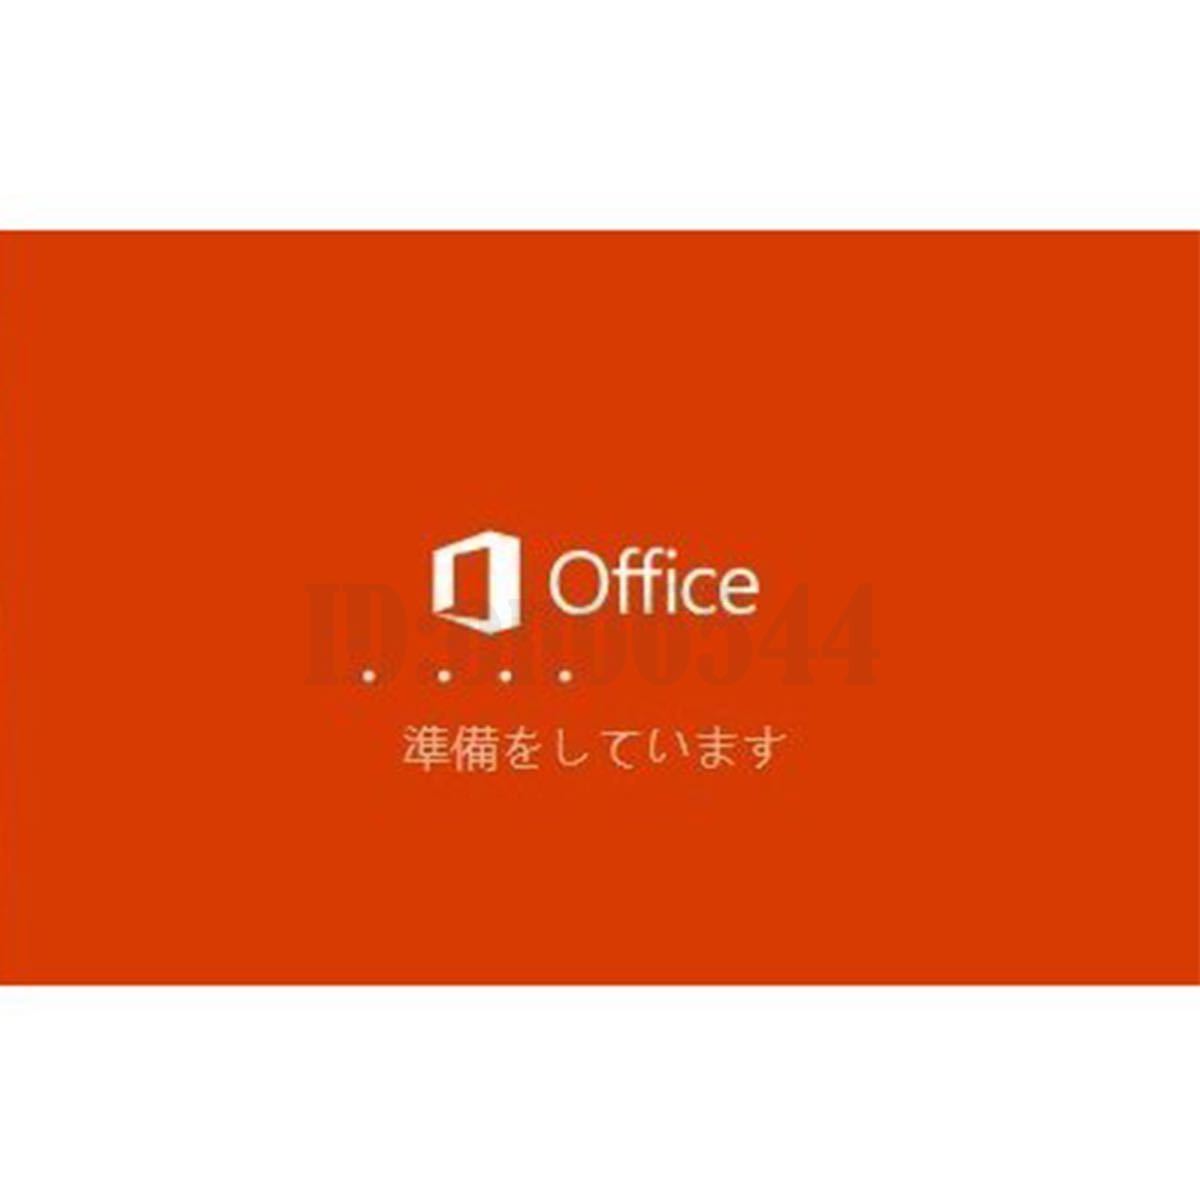 Office2021 ダウンロード版Microsoft Office 2021 Professional Plus プロダクトキー オフィス2021 認証保証 手順書あり サポート付きO7_画像2